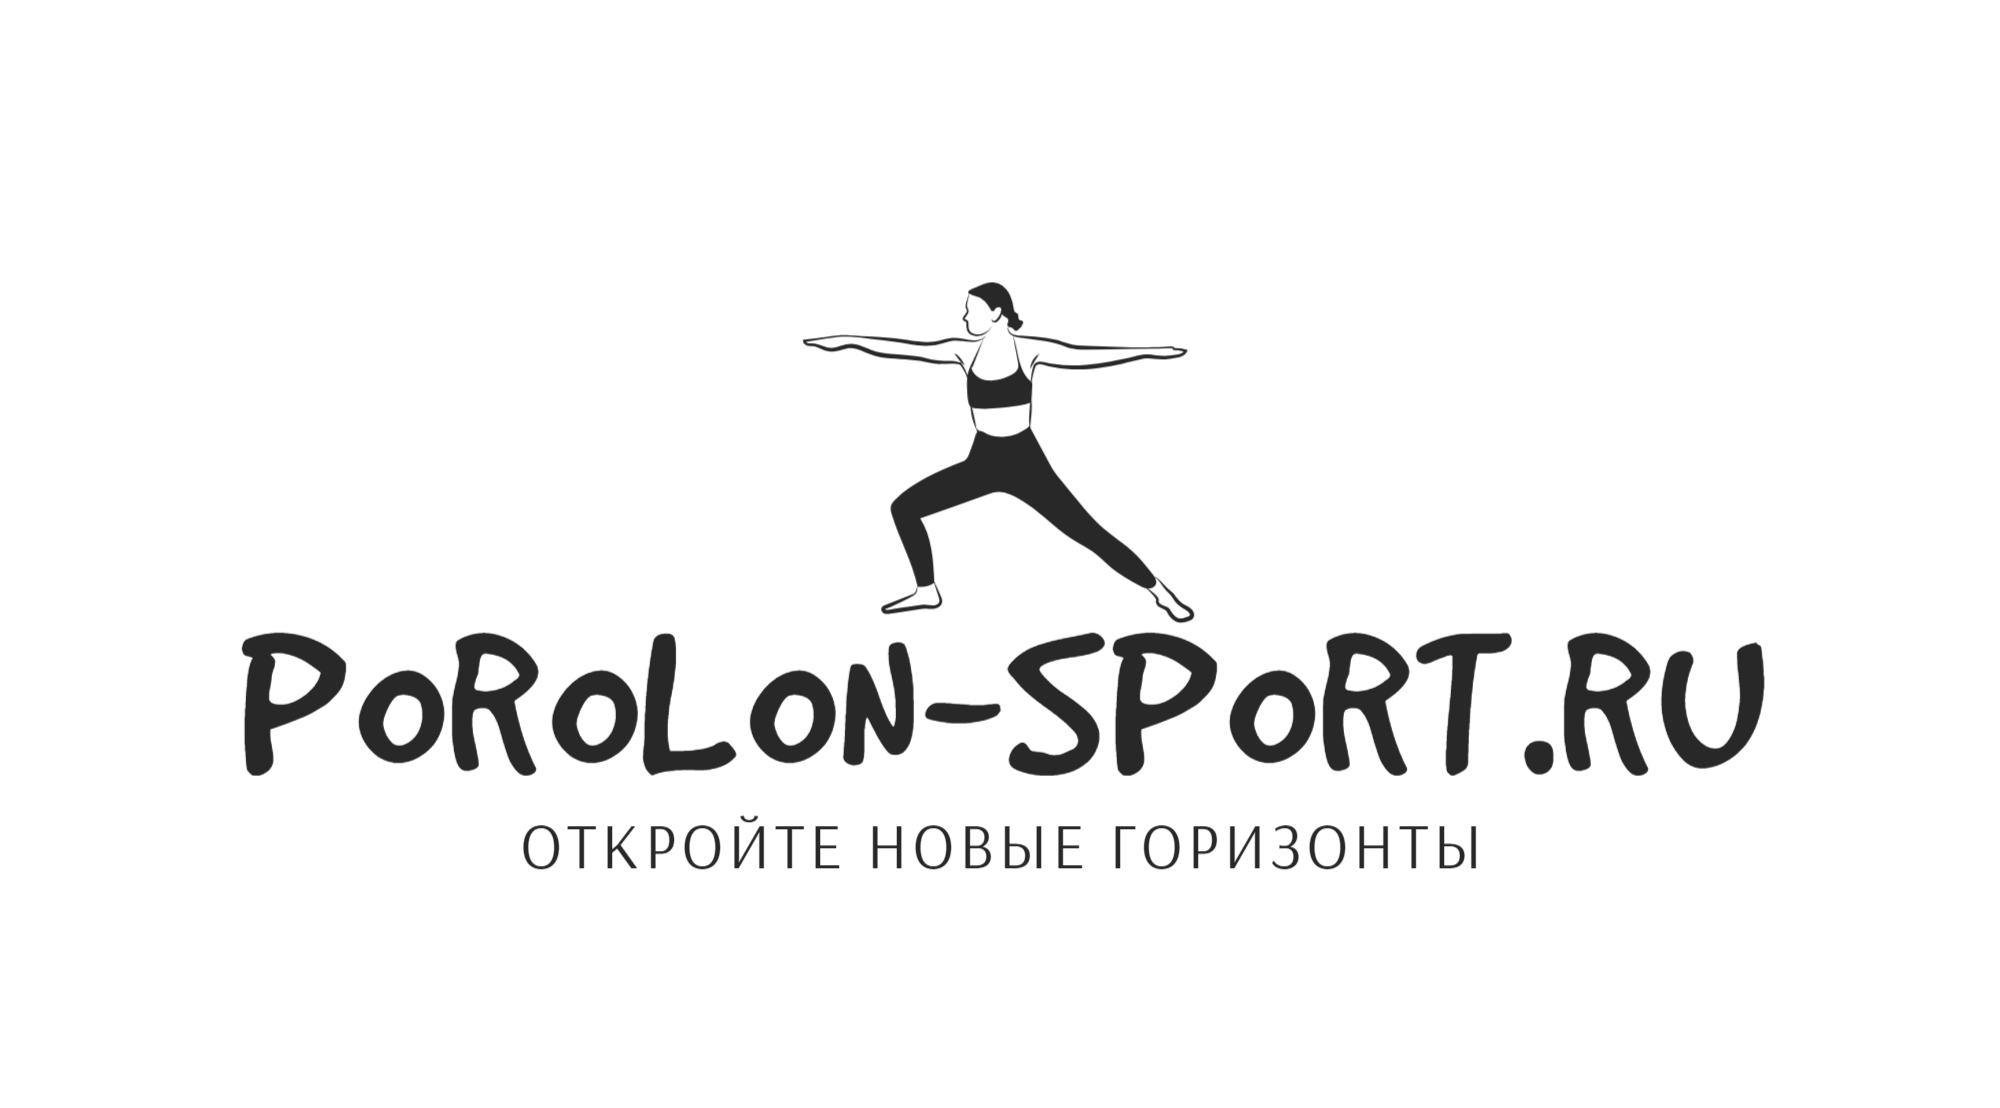 Porolon-sport.ru